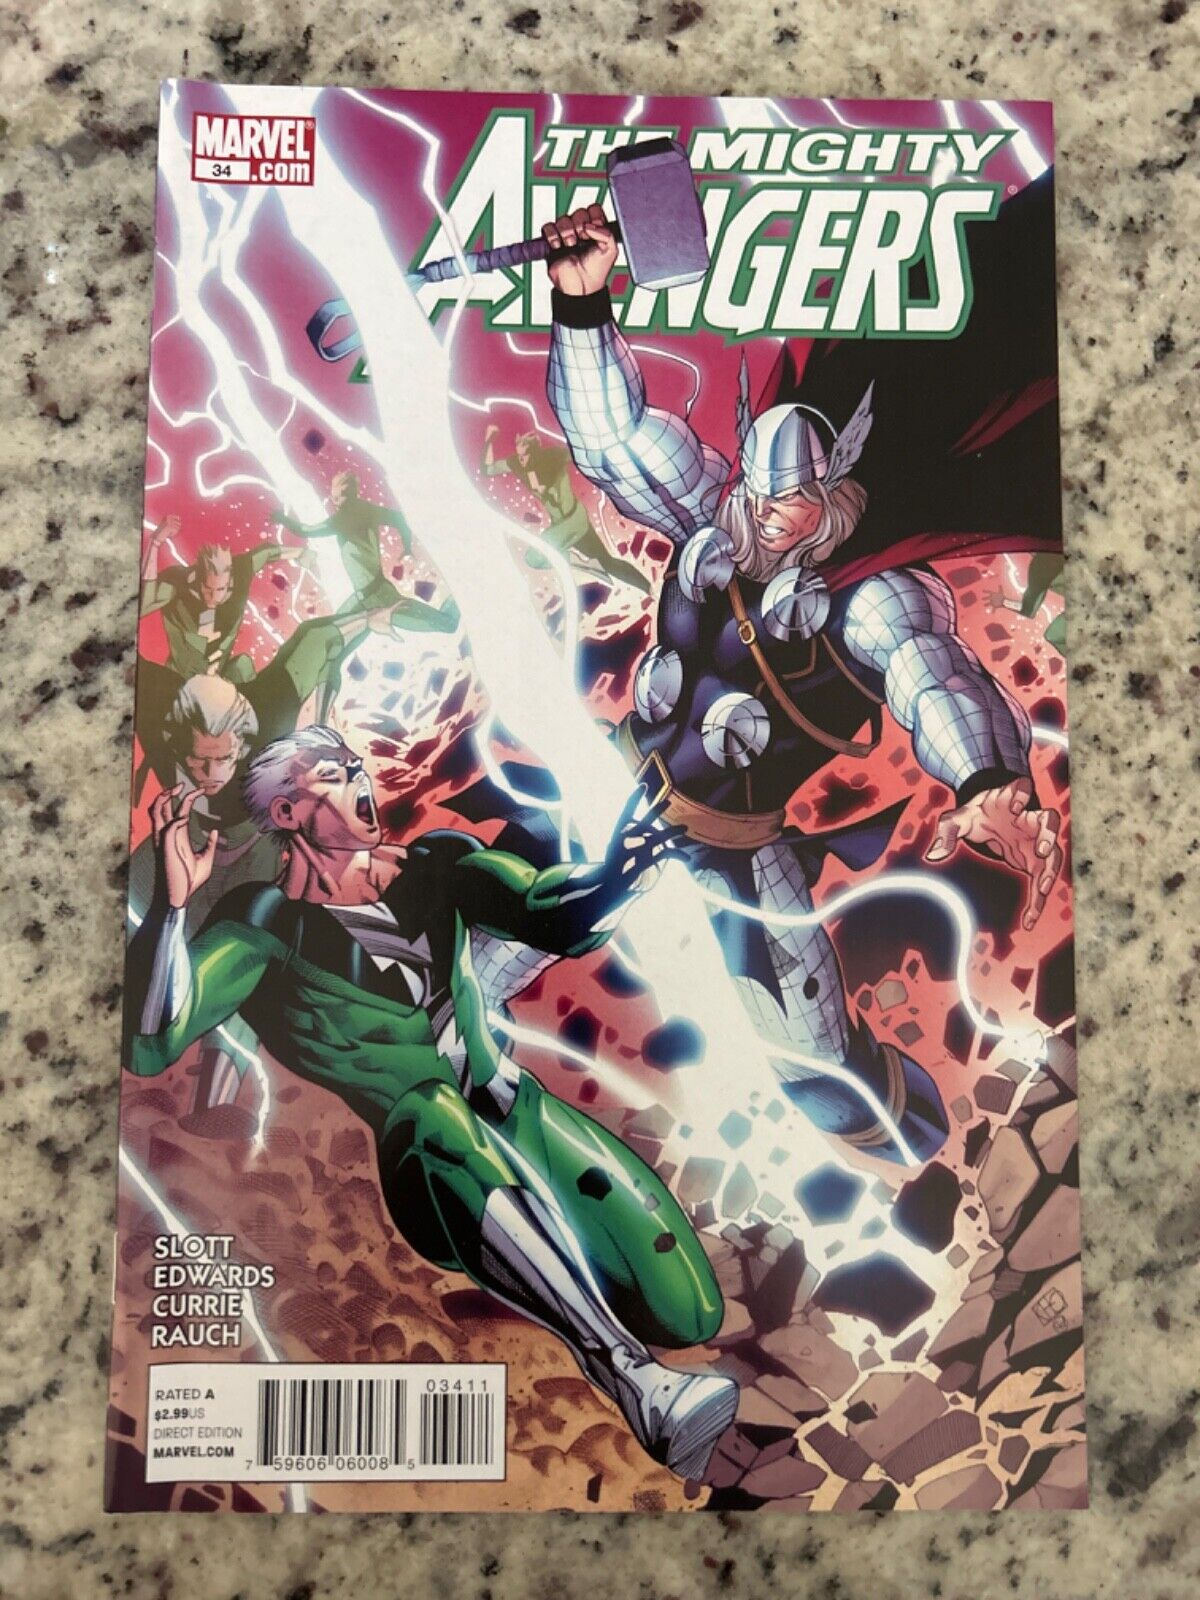 Mighty Avengers #34 Vol. 1 (Marvel, 2010) vf